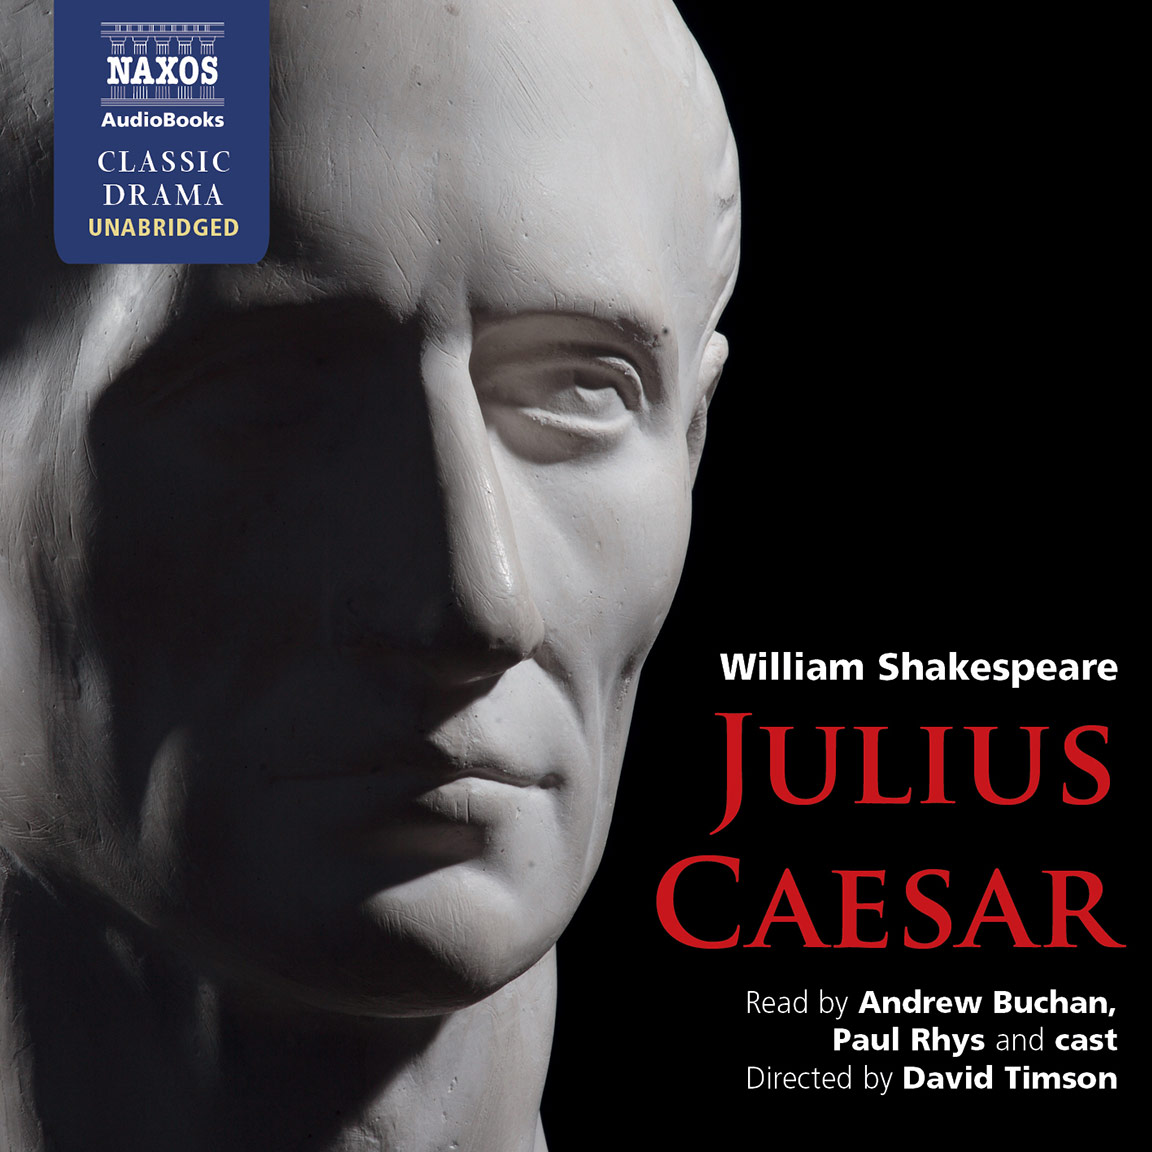 who is the protagonist in julius caesar